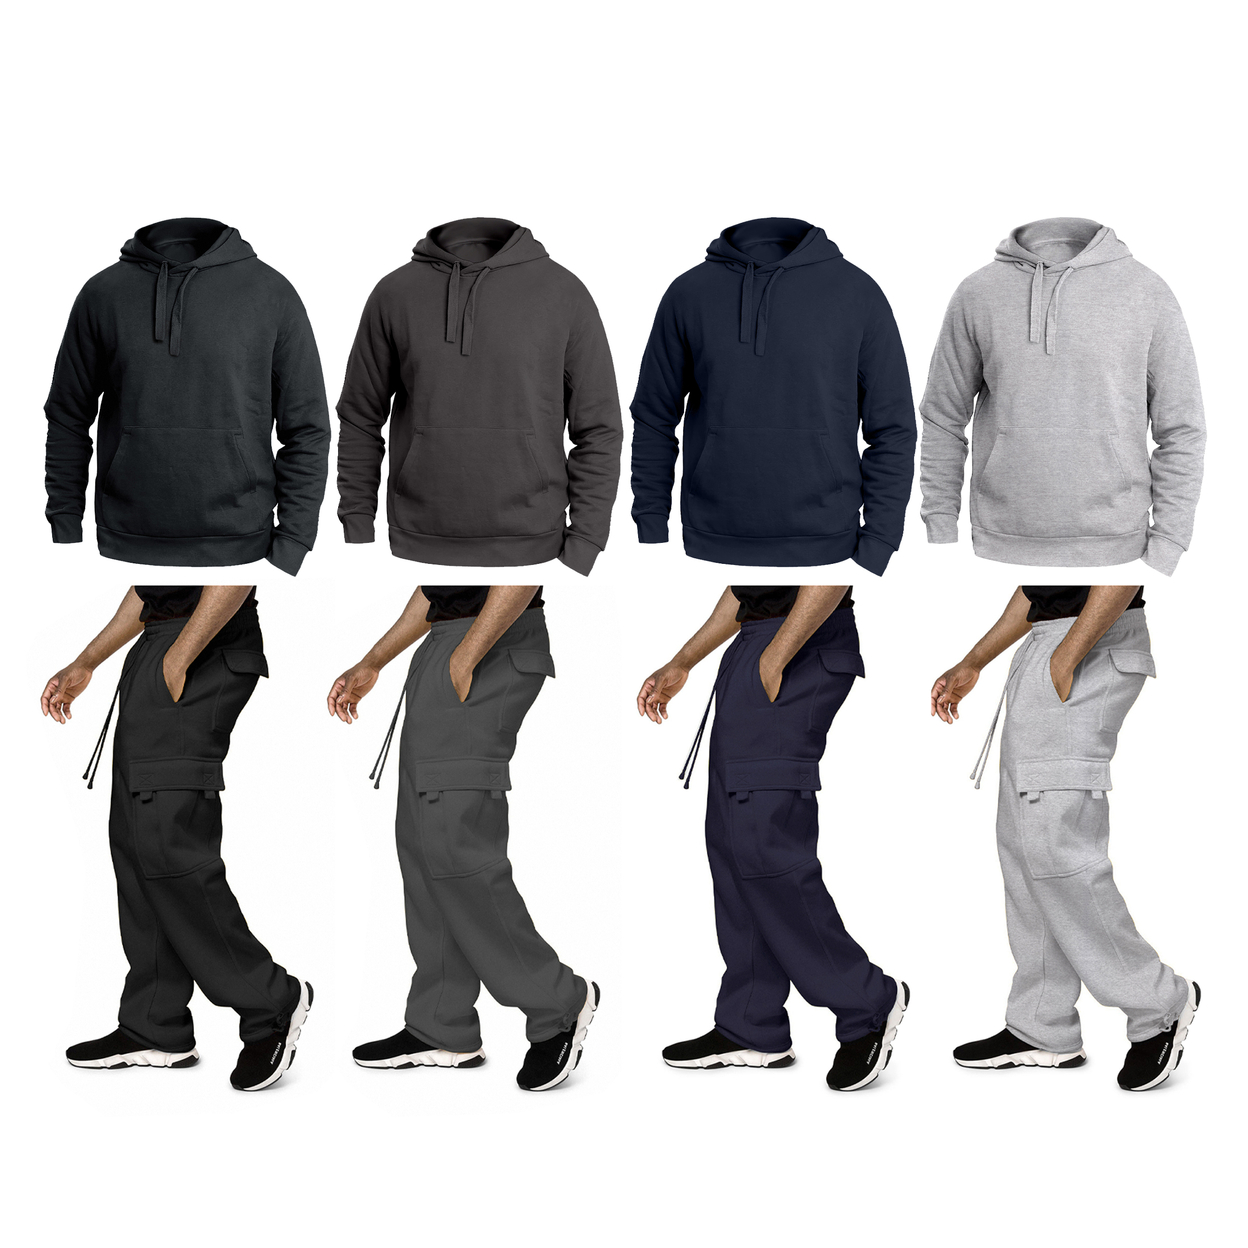 Multi-Pack: Big & Tall Men's Winter Warm Cozy Athletic Fleece Lined Multi-Pocket Cargo Sweatsuit - Navy, 1-pack, X-large